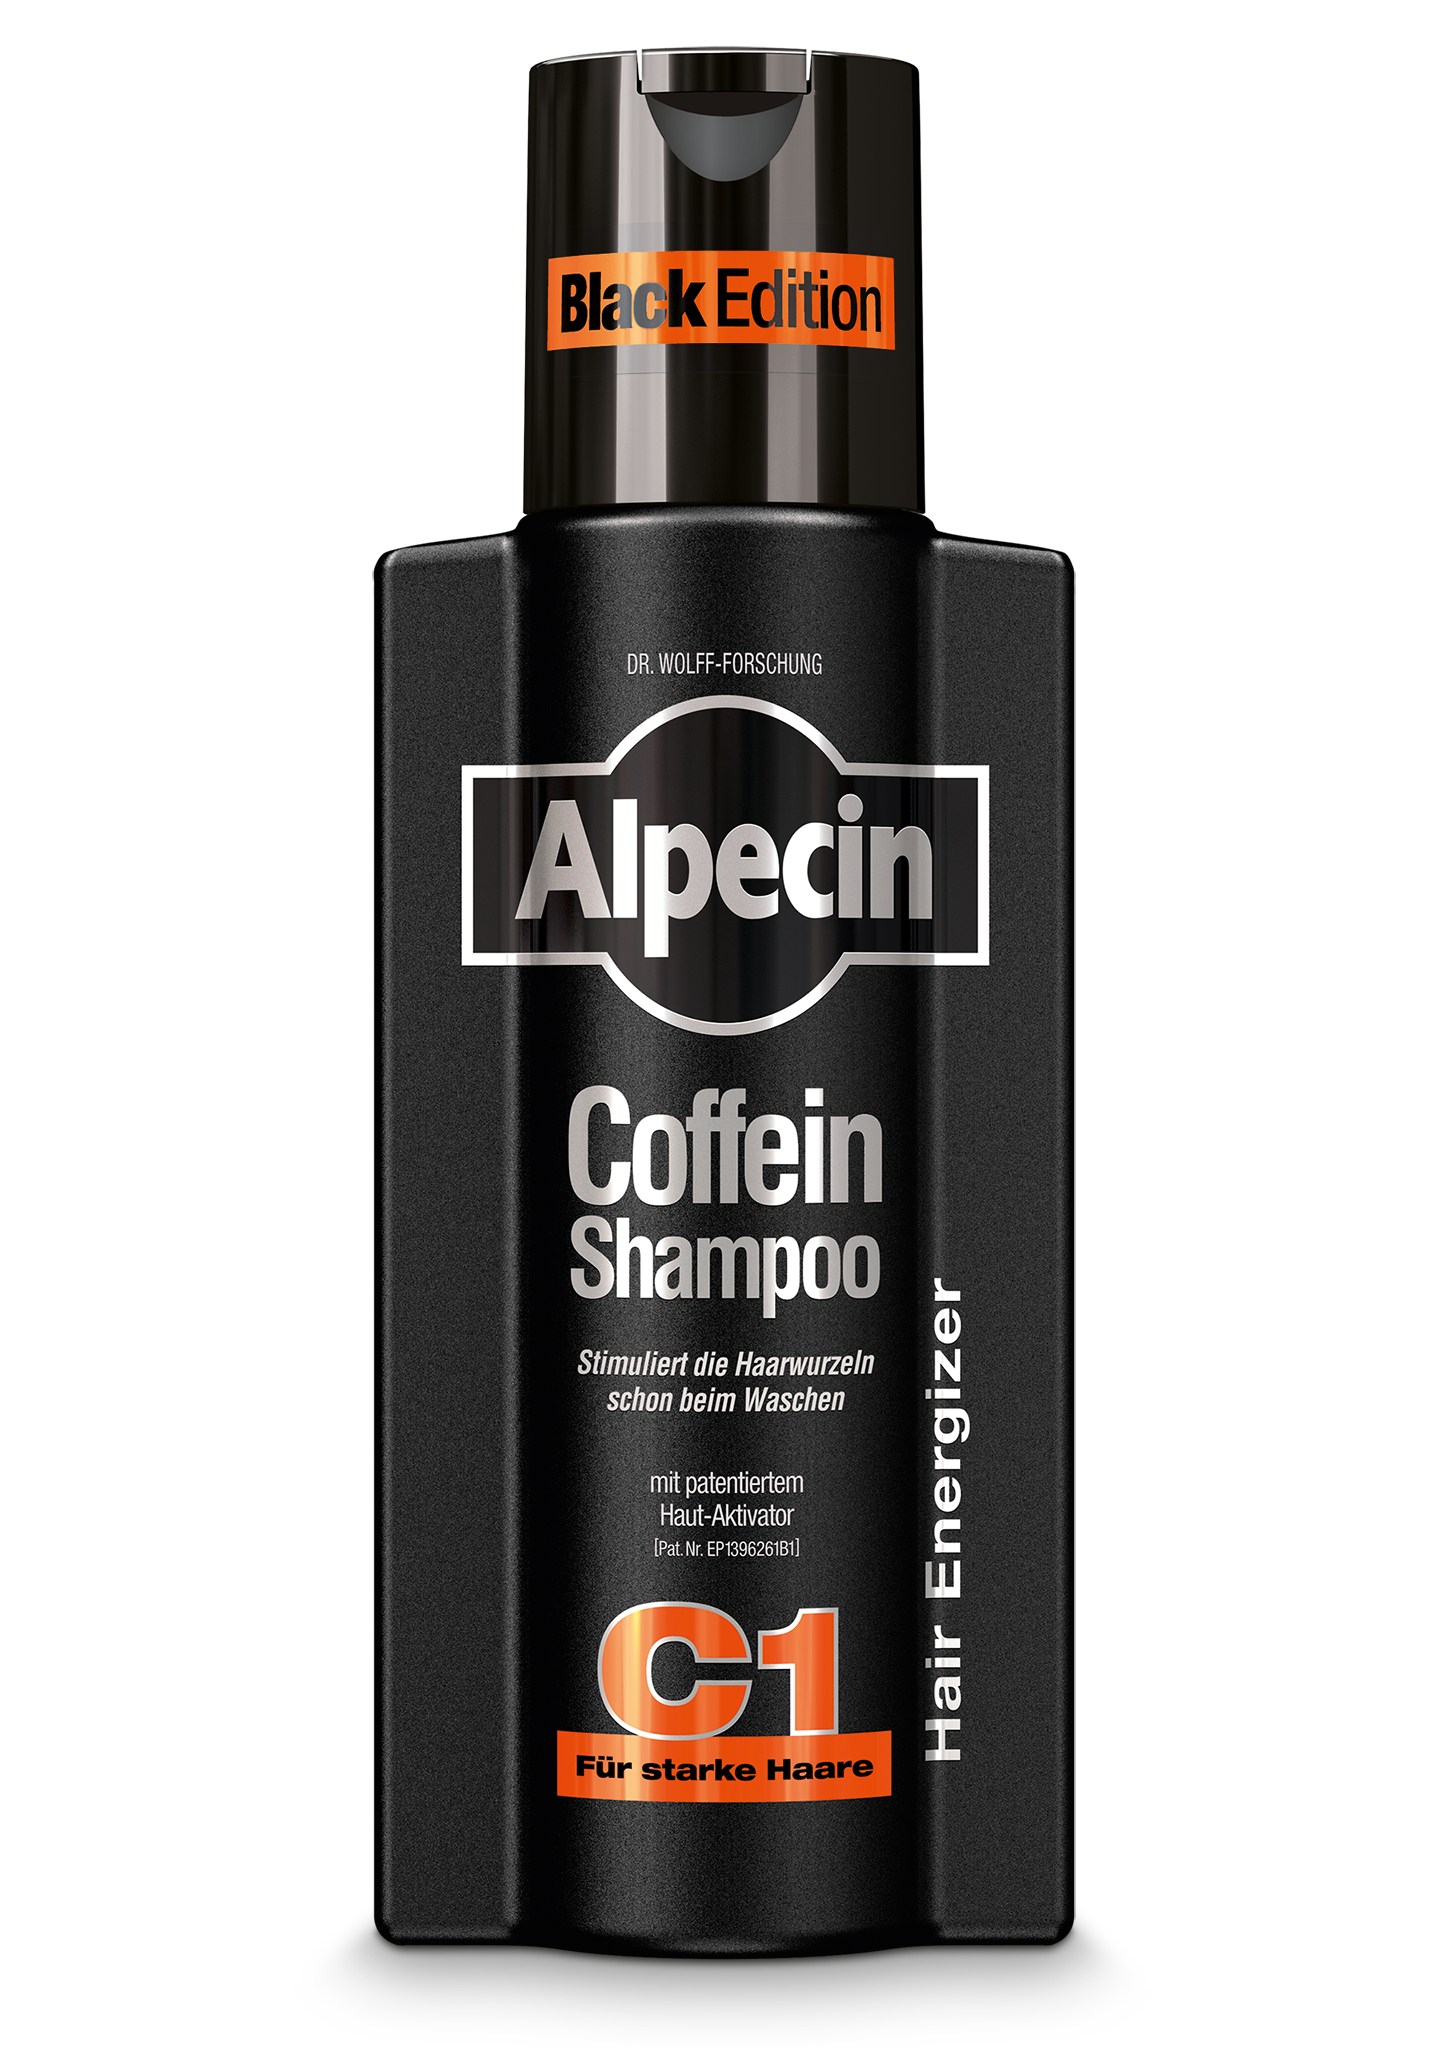 Alpecin Coffein Shampoo C1 Black Edition